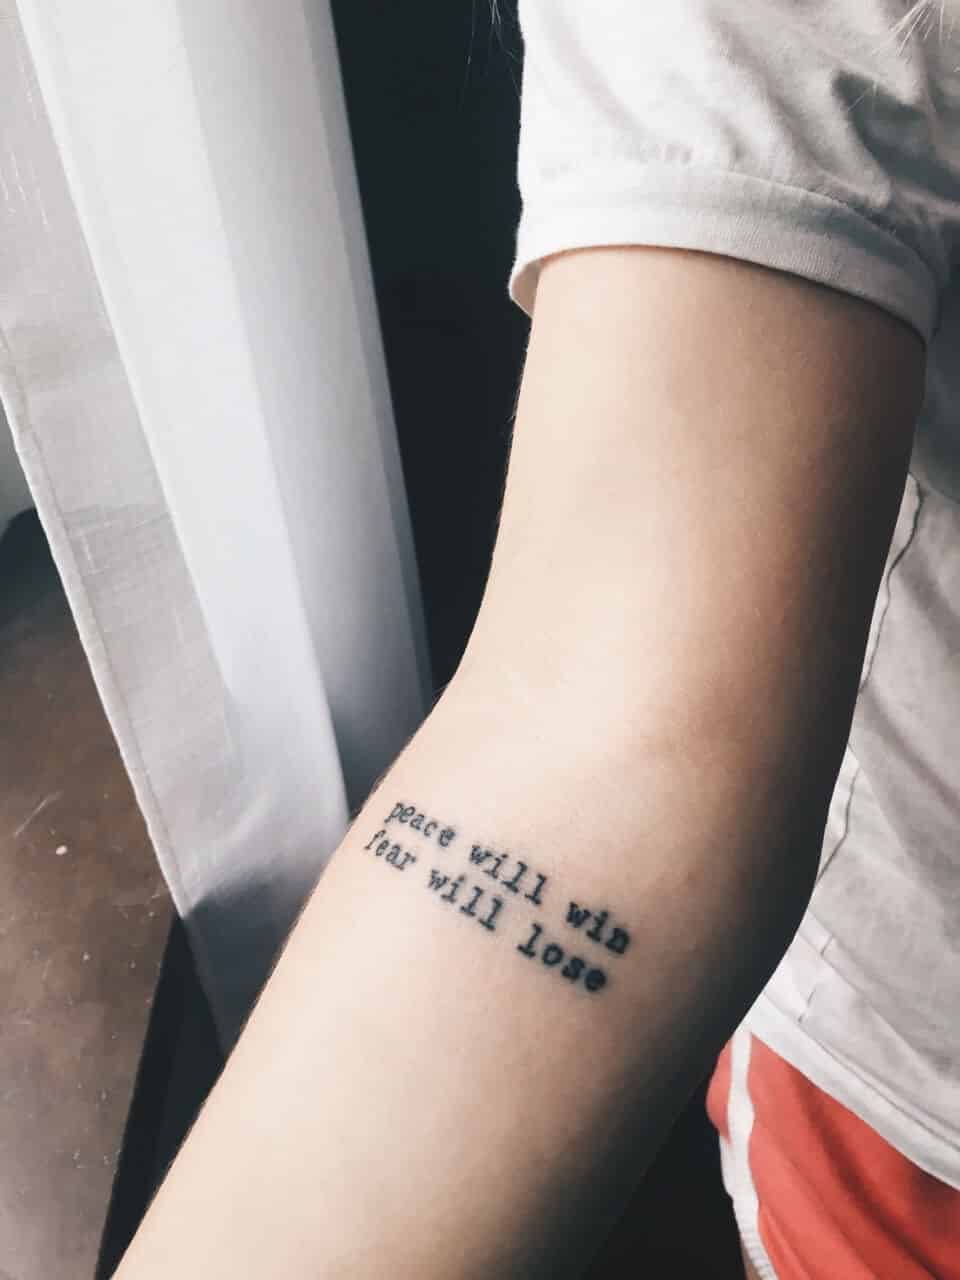 "Peace will win. Fear will lose" arm tattoo quote